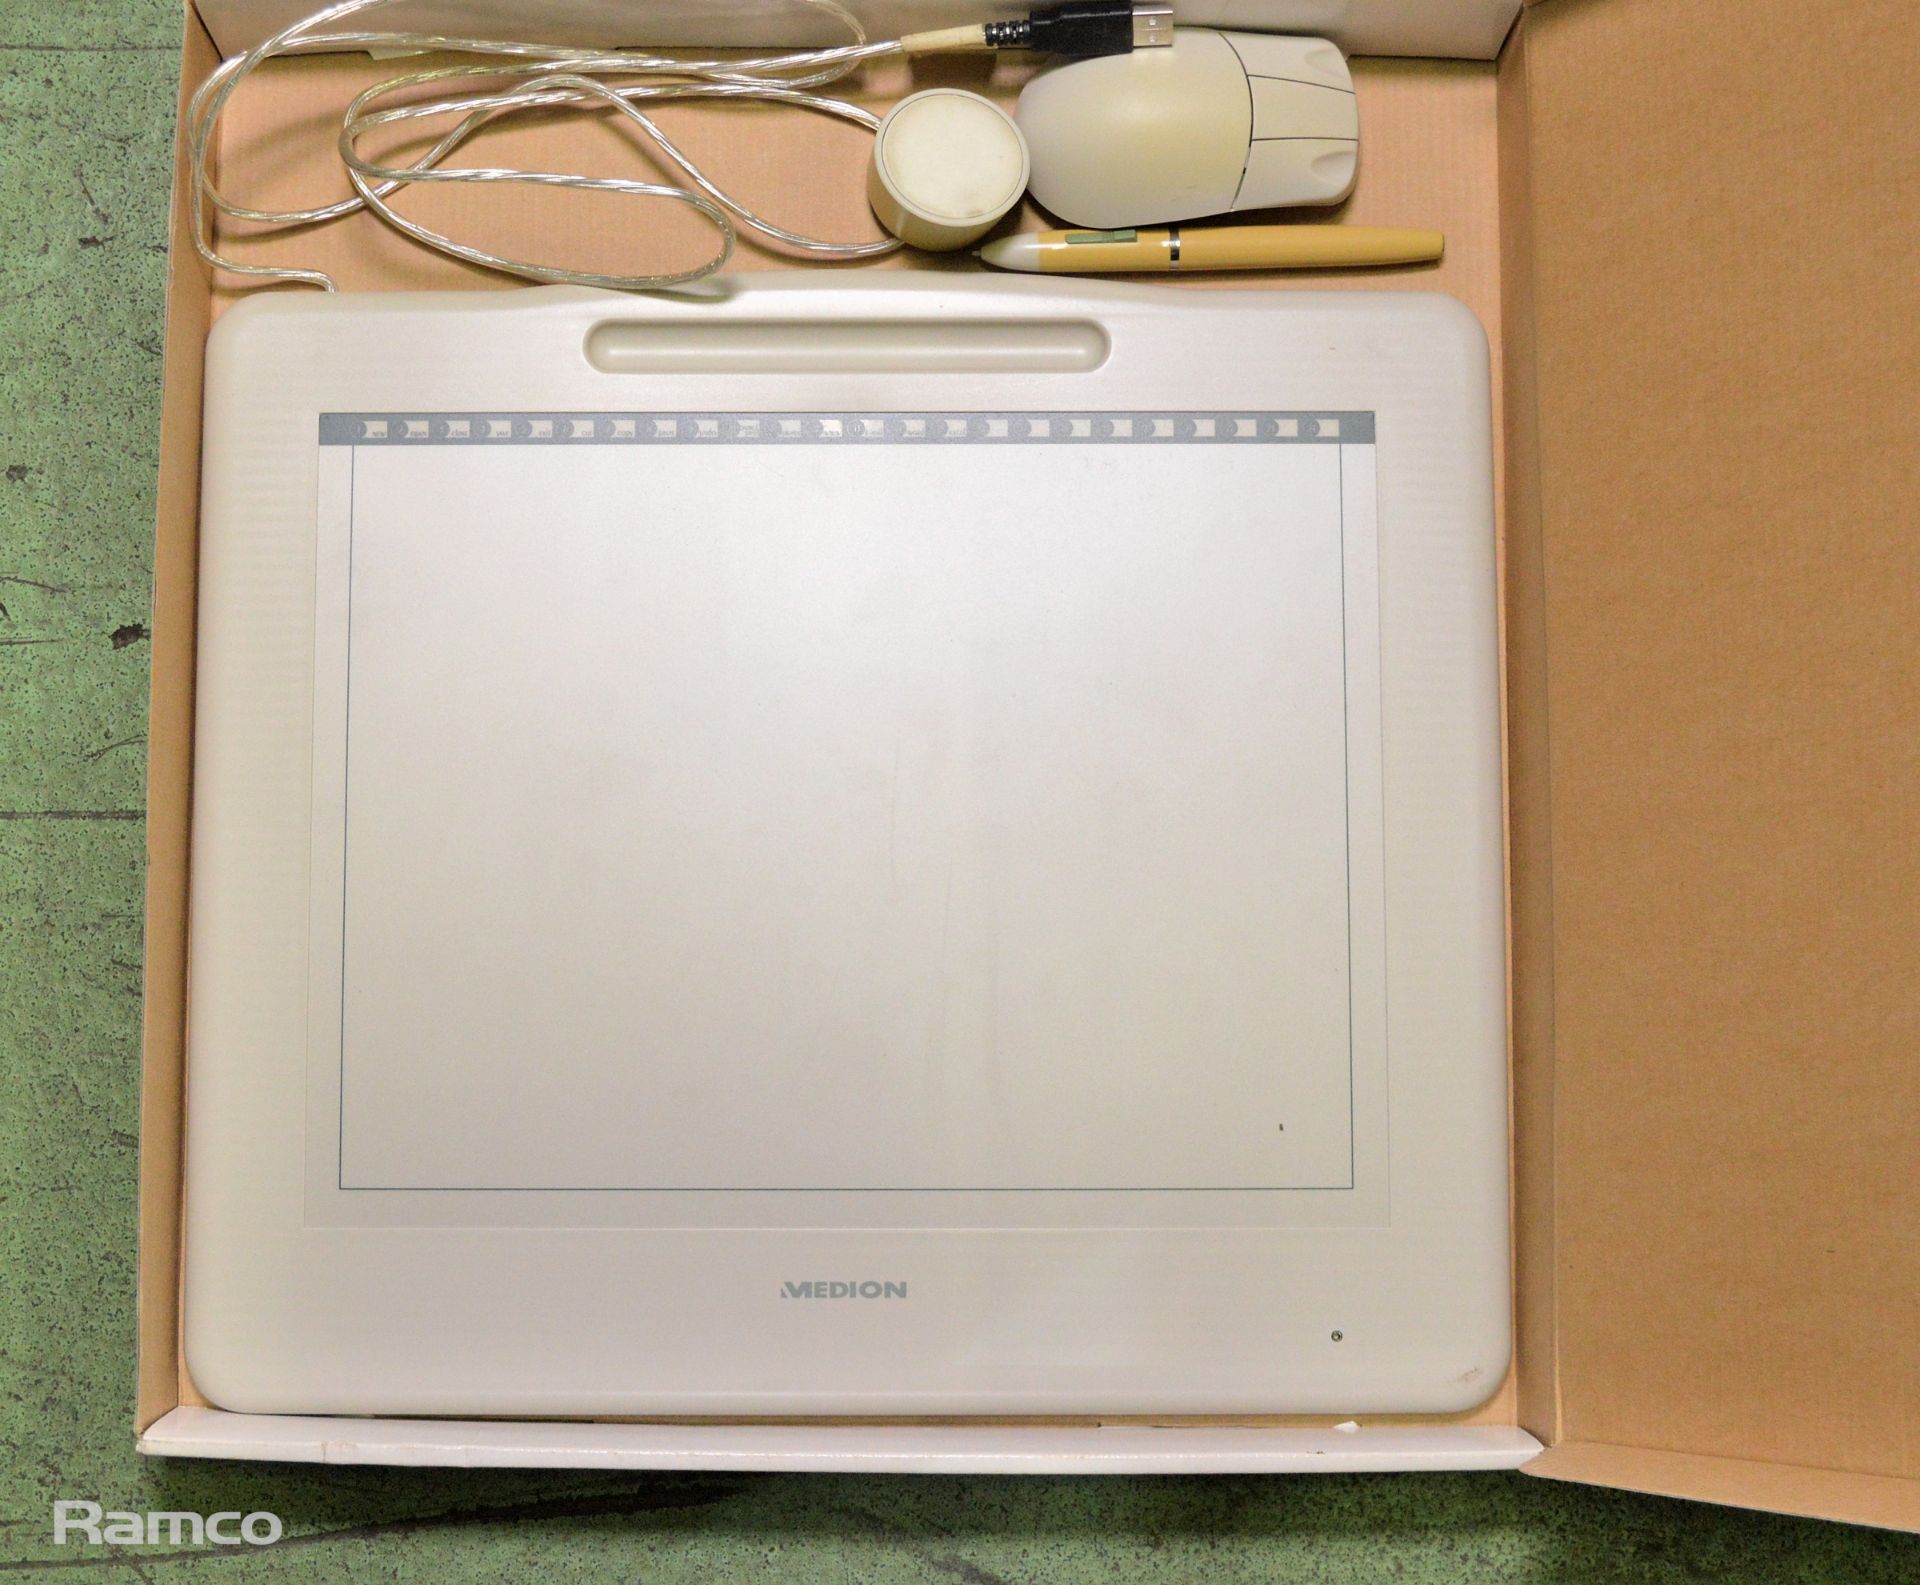 Medion computer USB graphics tablet - Image 3 of 3